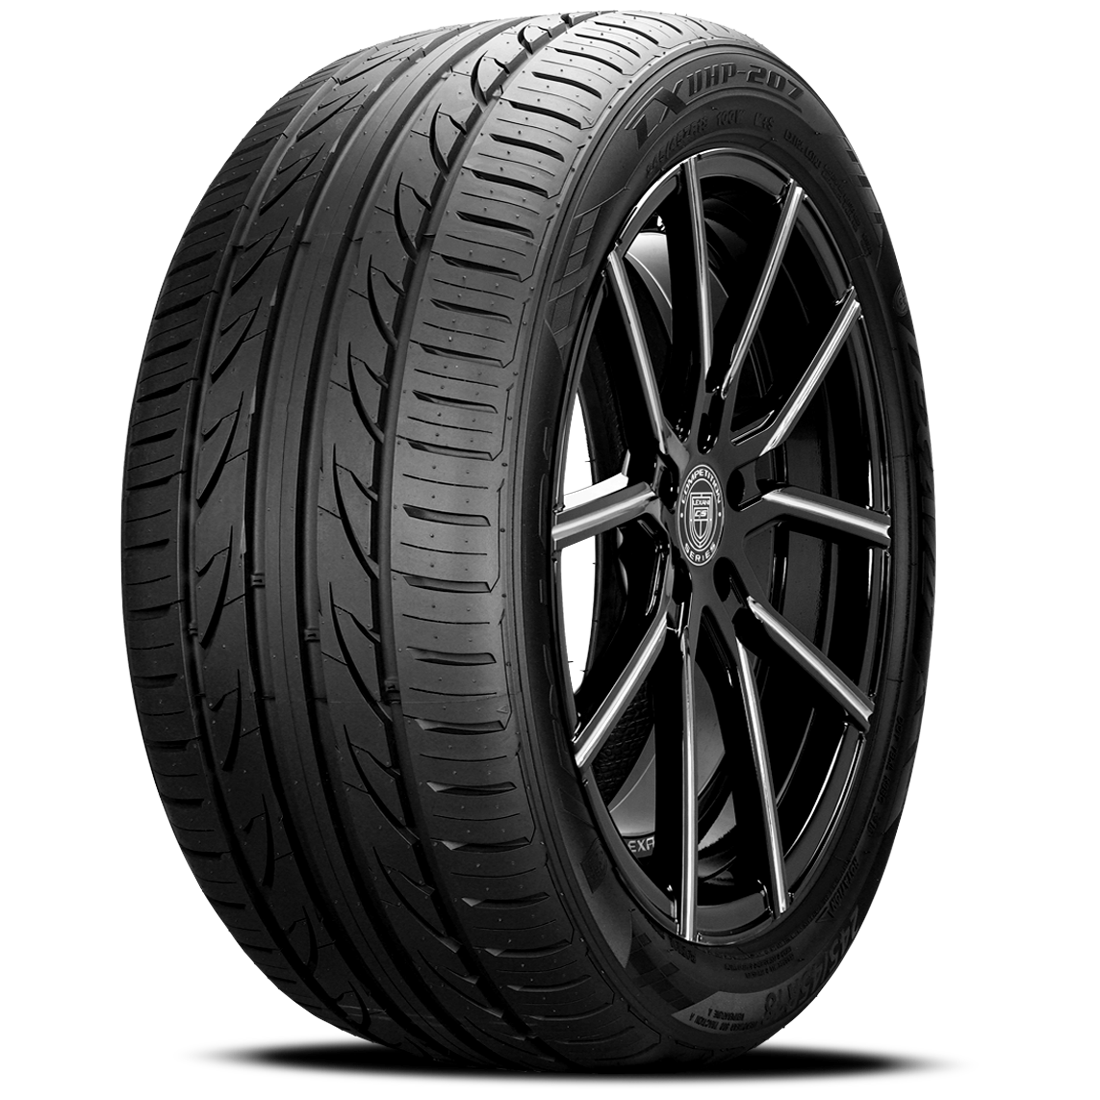 LEXANI LXUHP-207 215/40ZR18 (24.8X8.5R 18) Tires